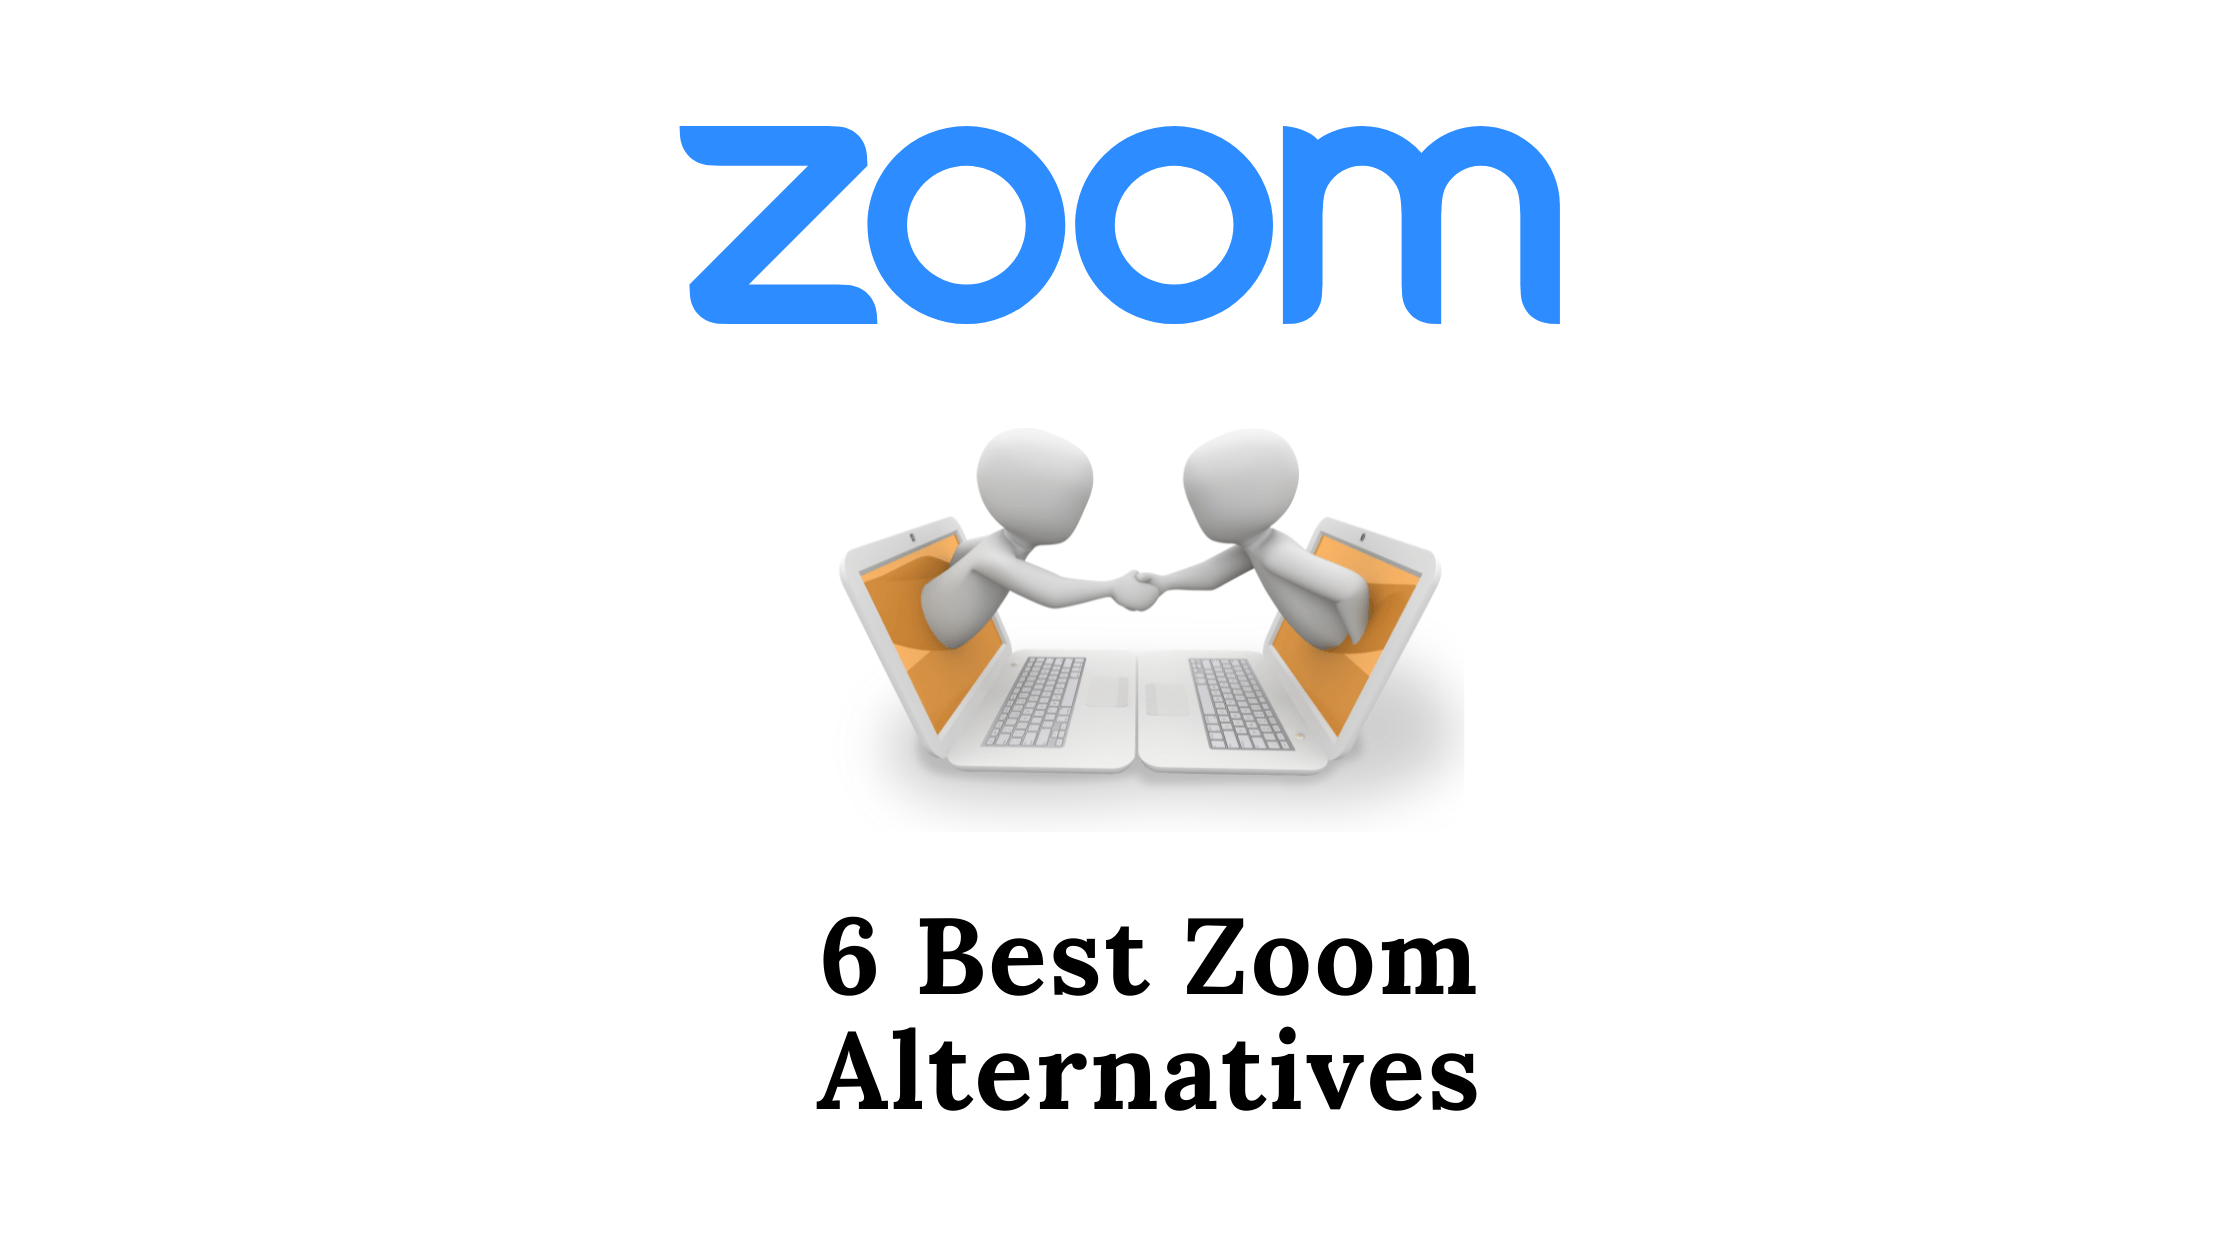 6 Best Zoom Alternatives